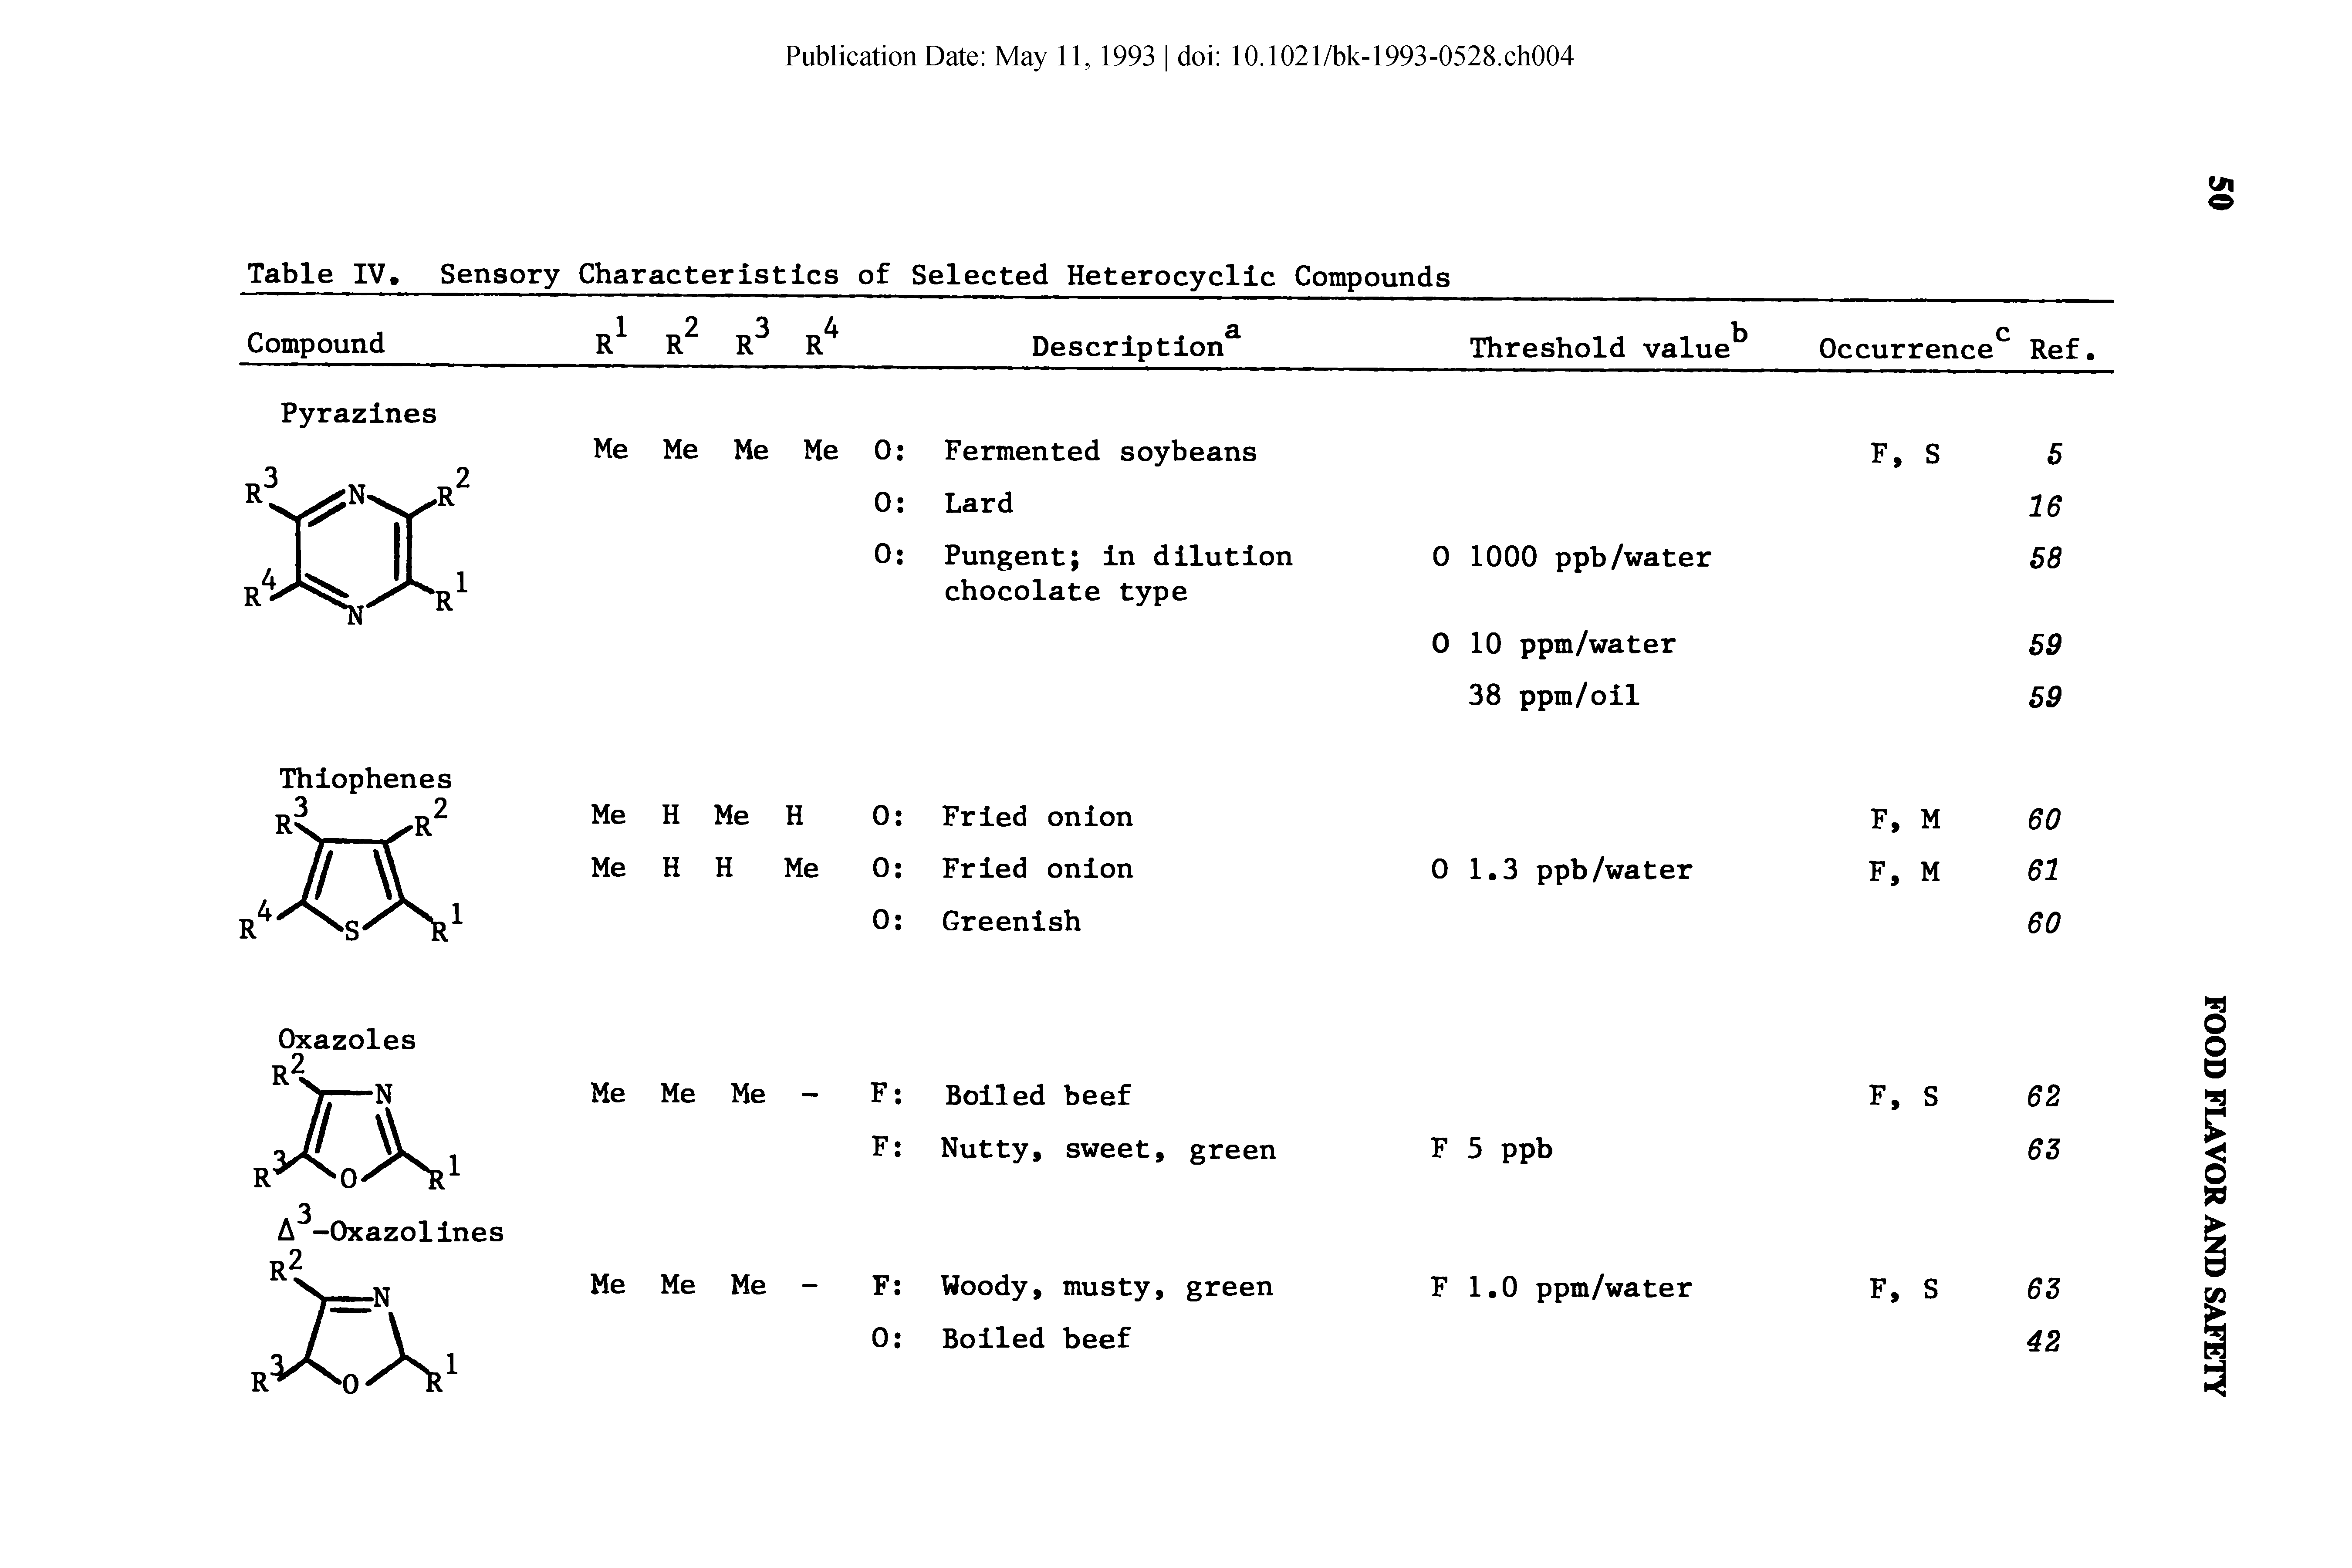 Table IV, Sensory Characteristics of Selected Heterocyclic Compounds...